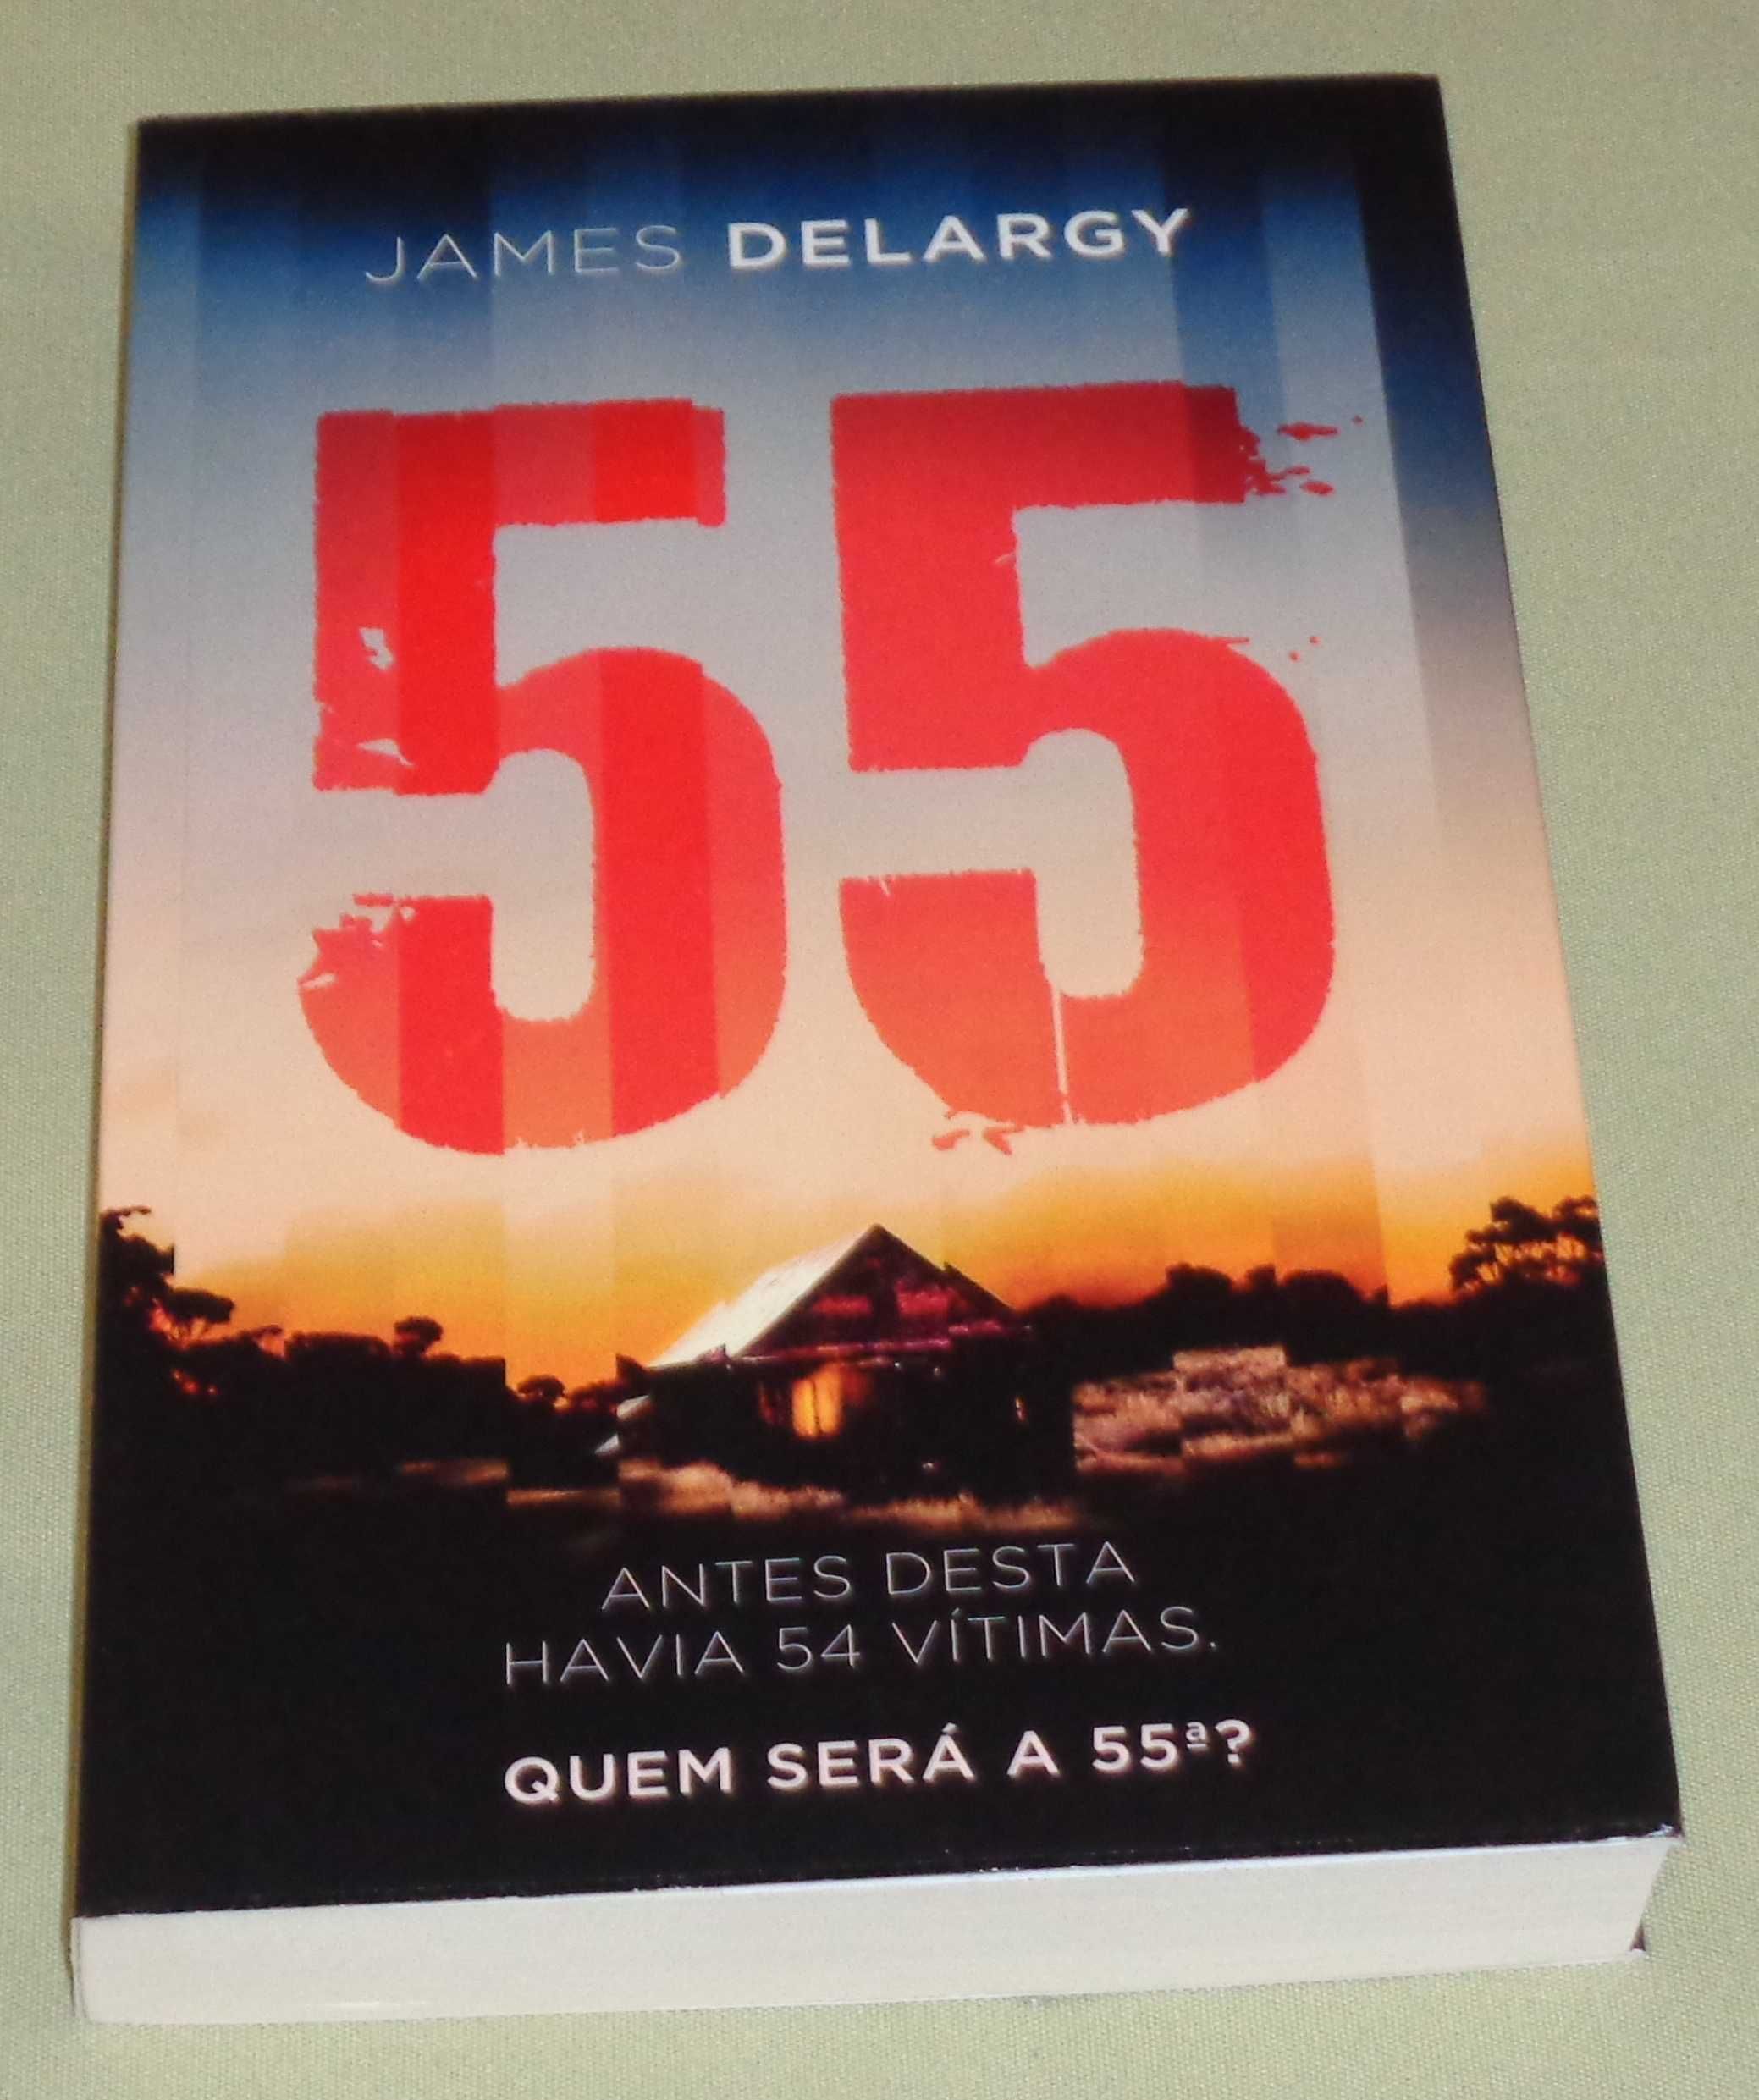 55 de James Delargy